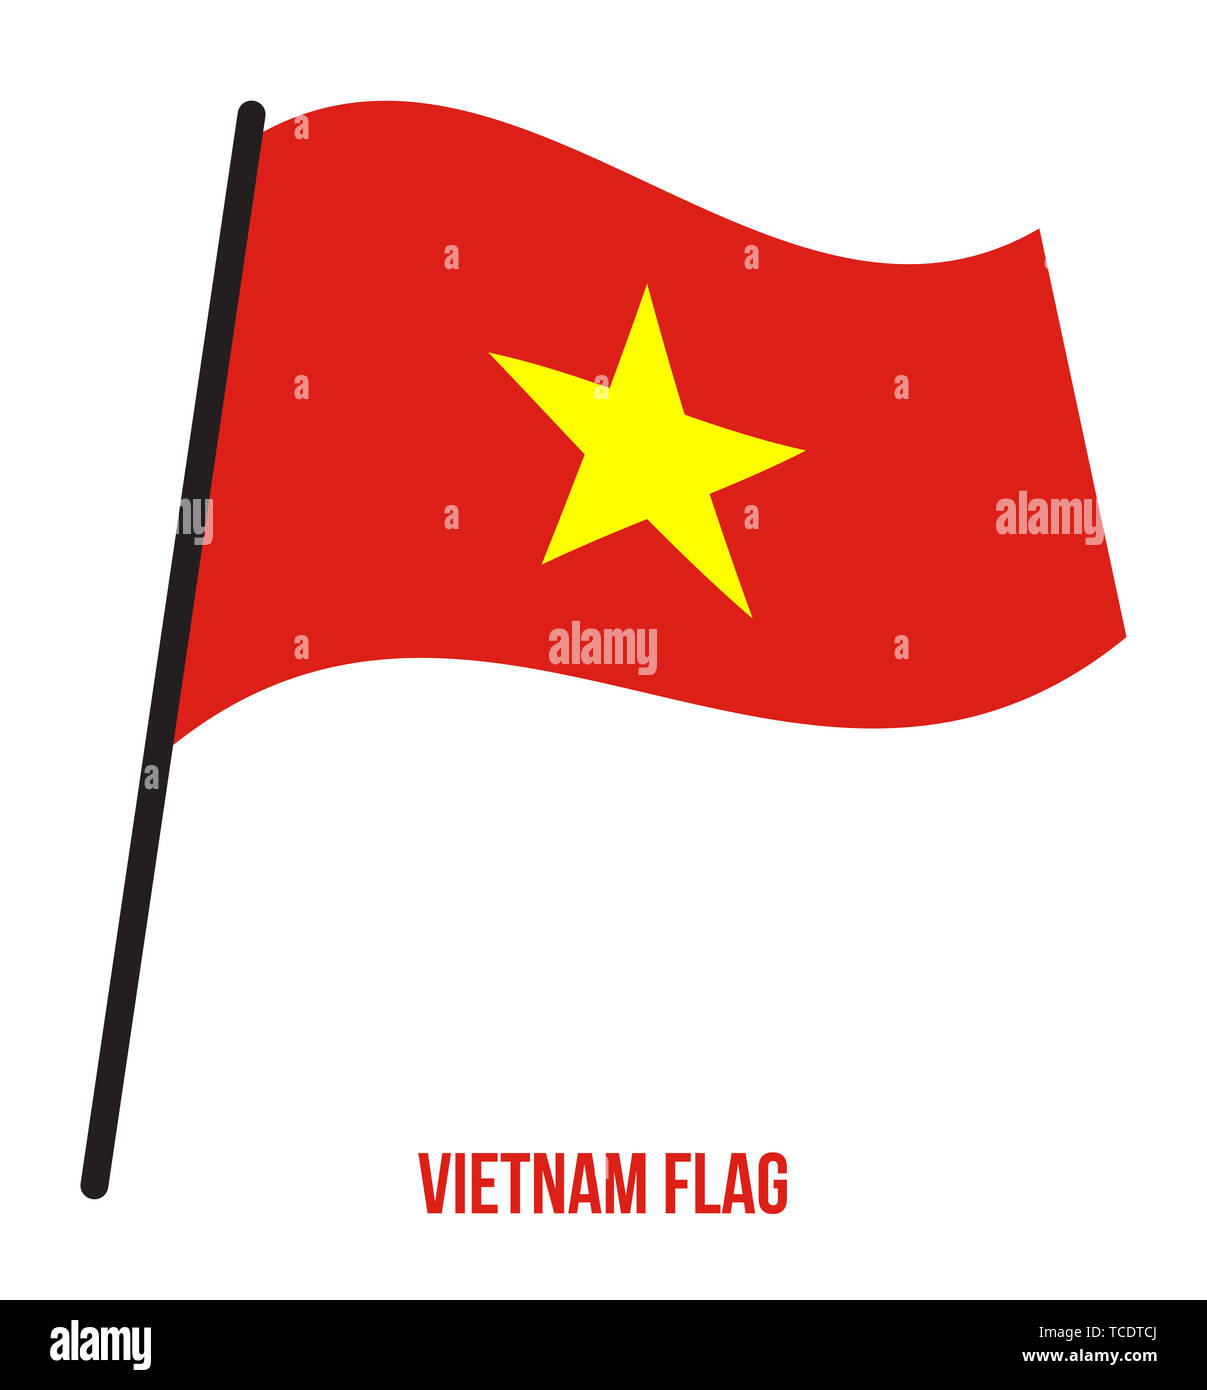 Vietnam Flag Waving Vector Illustration on White Background. Vietnam National Flag. Stock Photo